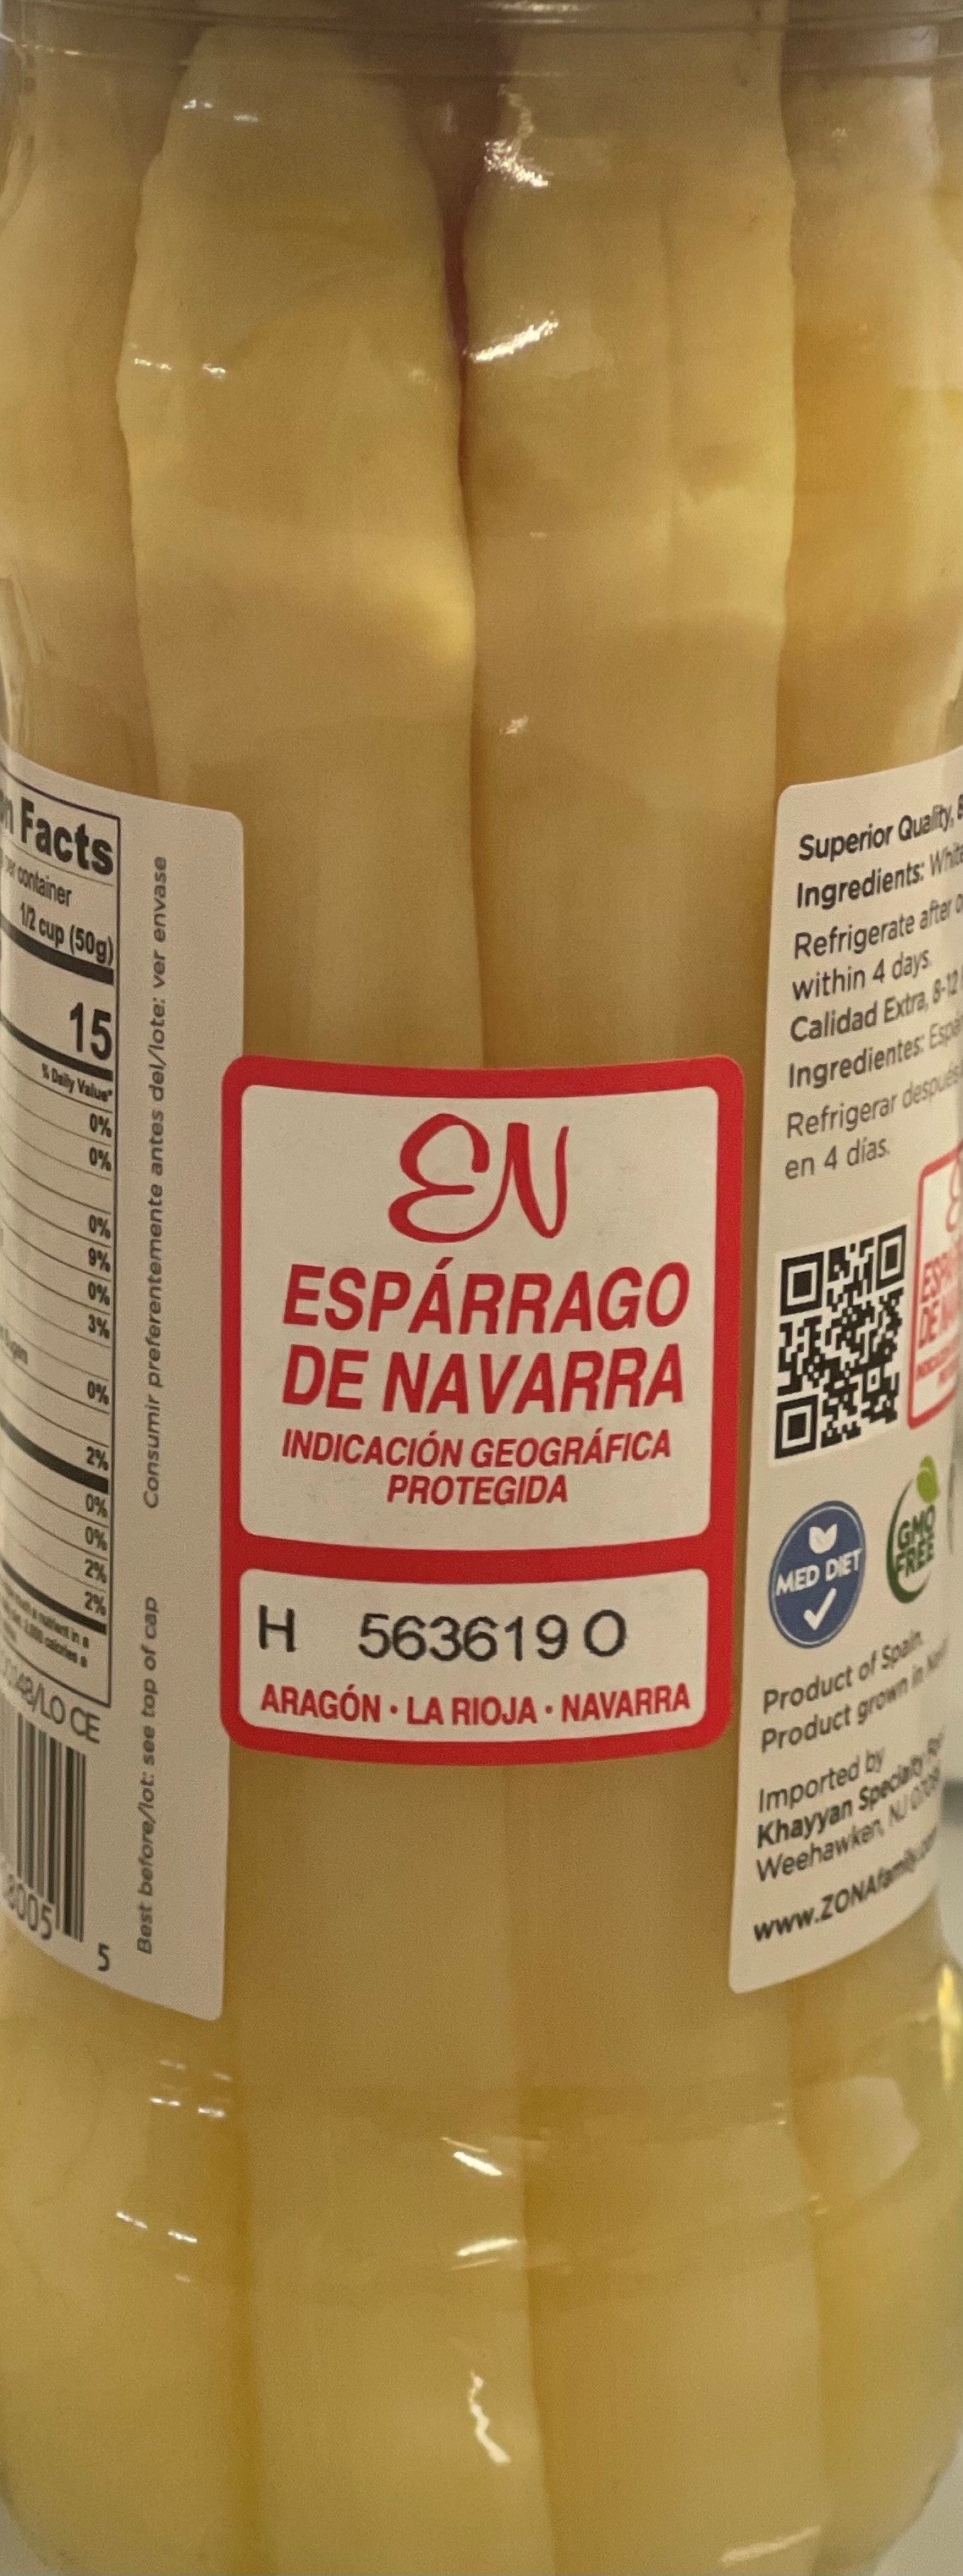 DOP Asparagus of Navarra